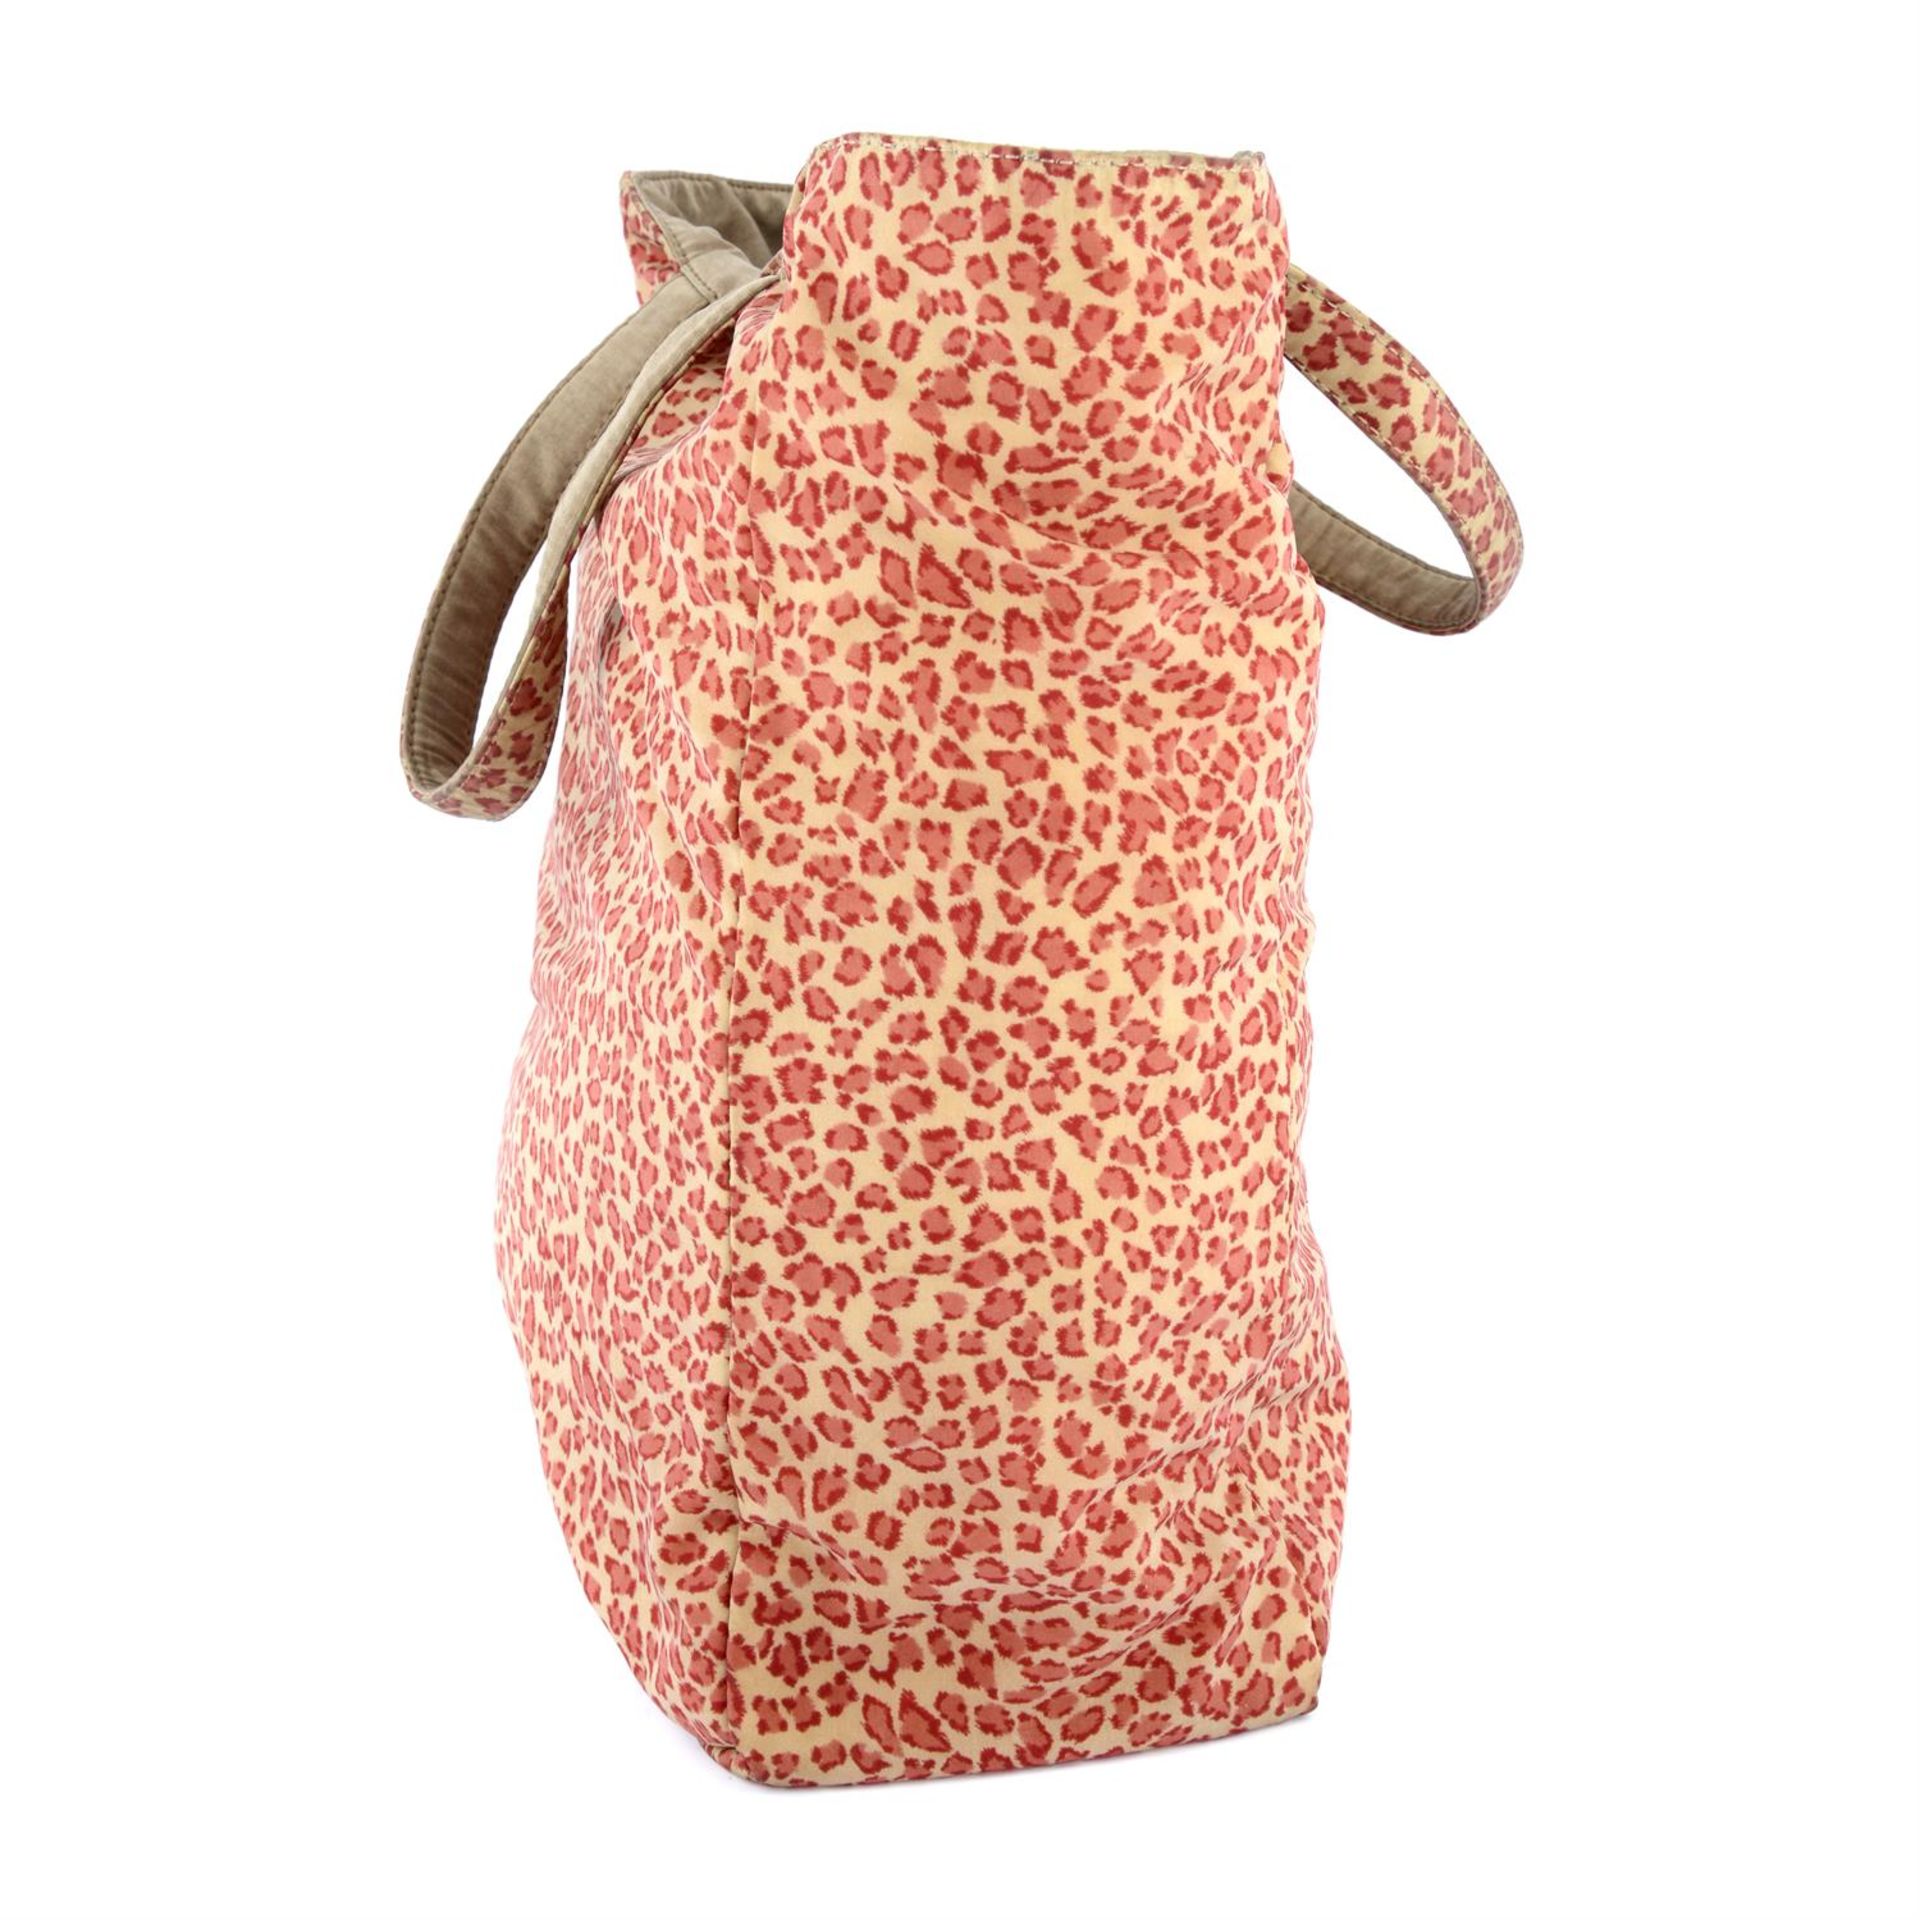 BOTTEGA VENETA - a reversible nylon Leopard print shopping bag. - Image 3 of 4